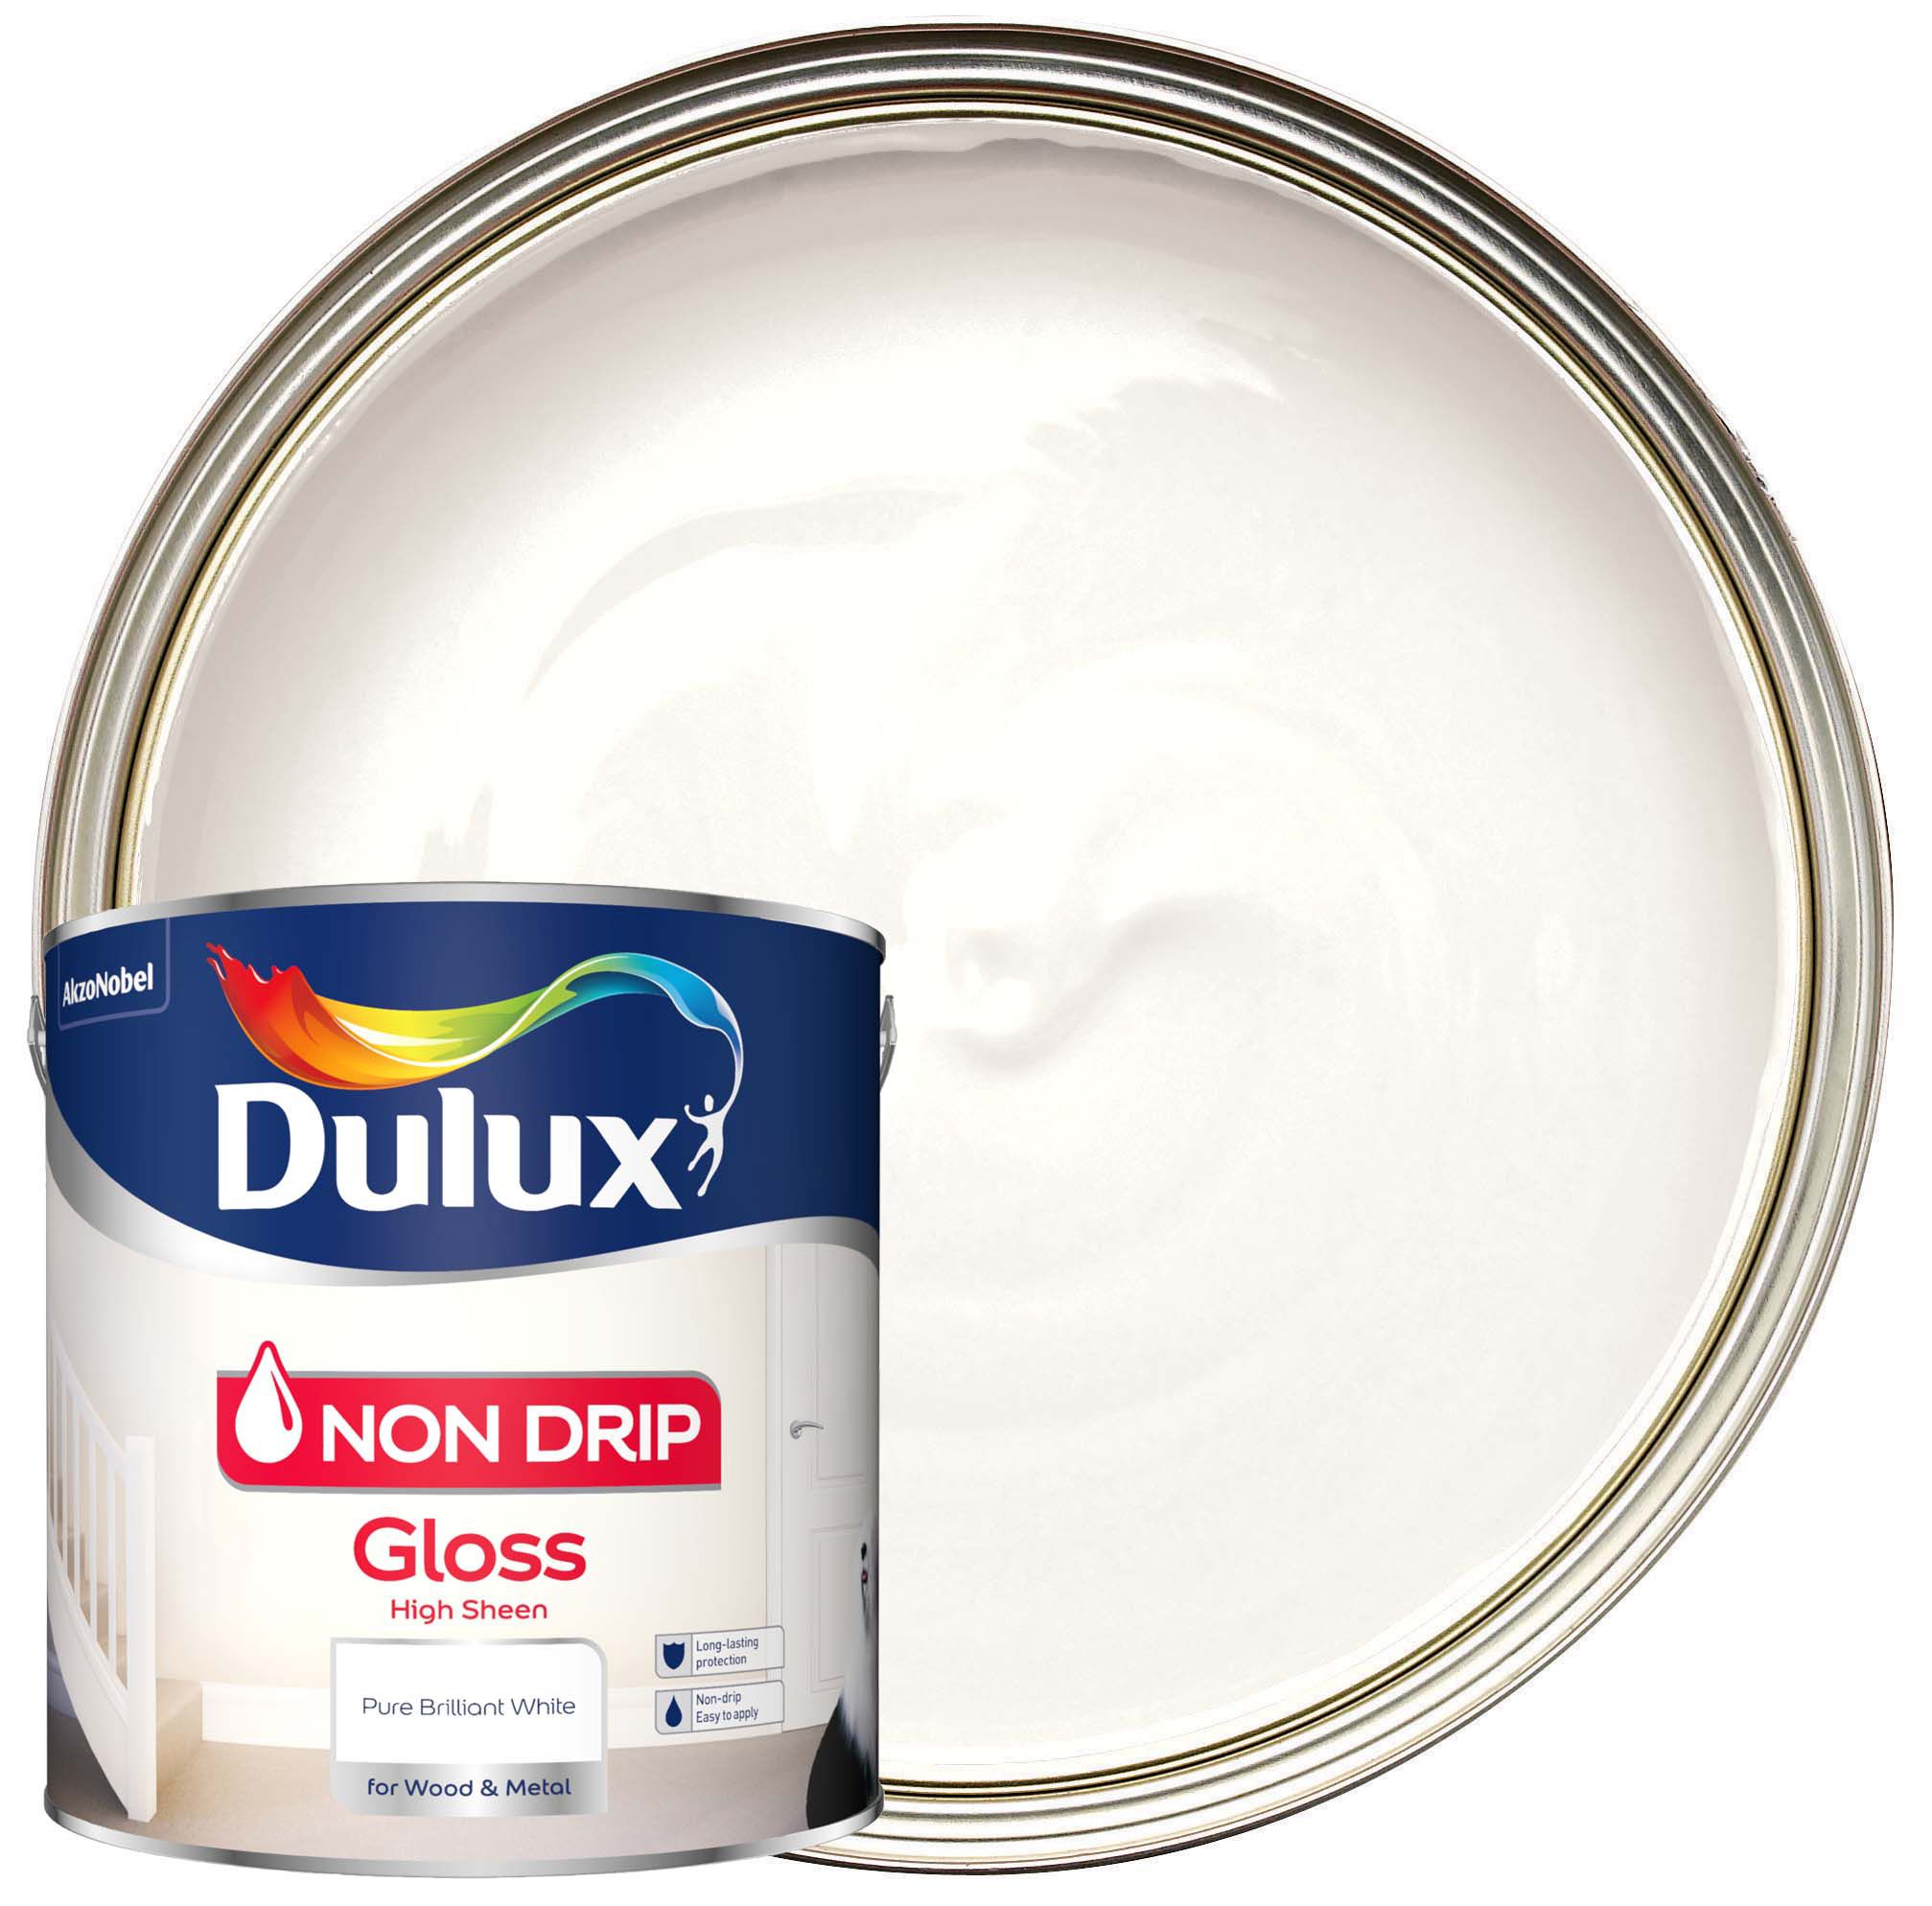 Image of Dulux Non Drip Gloss Paint - Pure Brilliant White - 2.5L